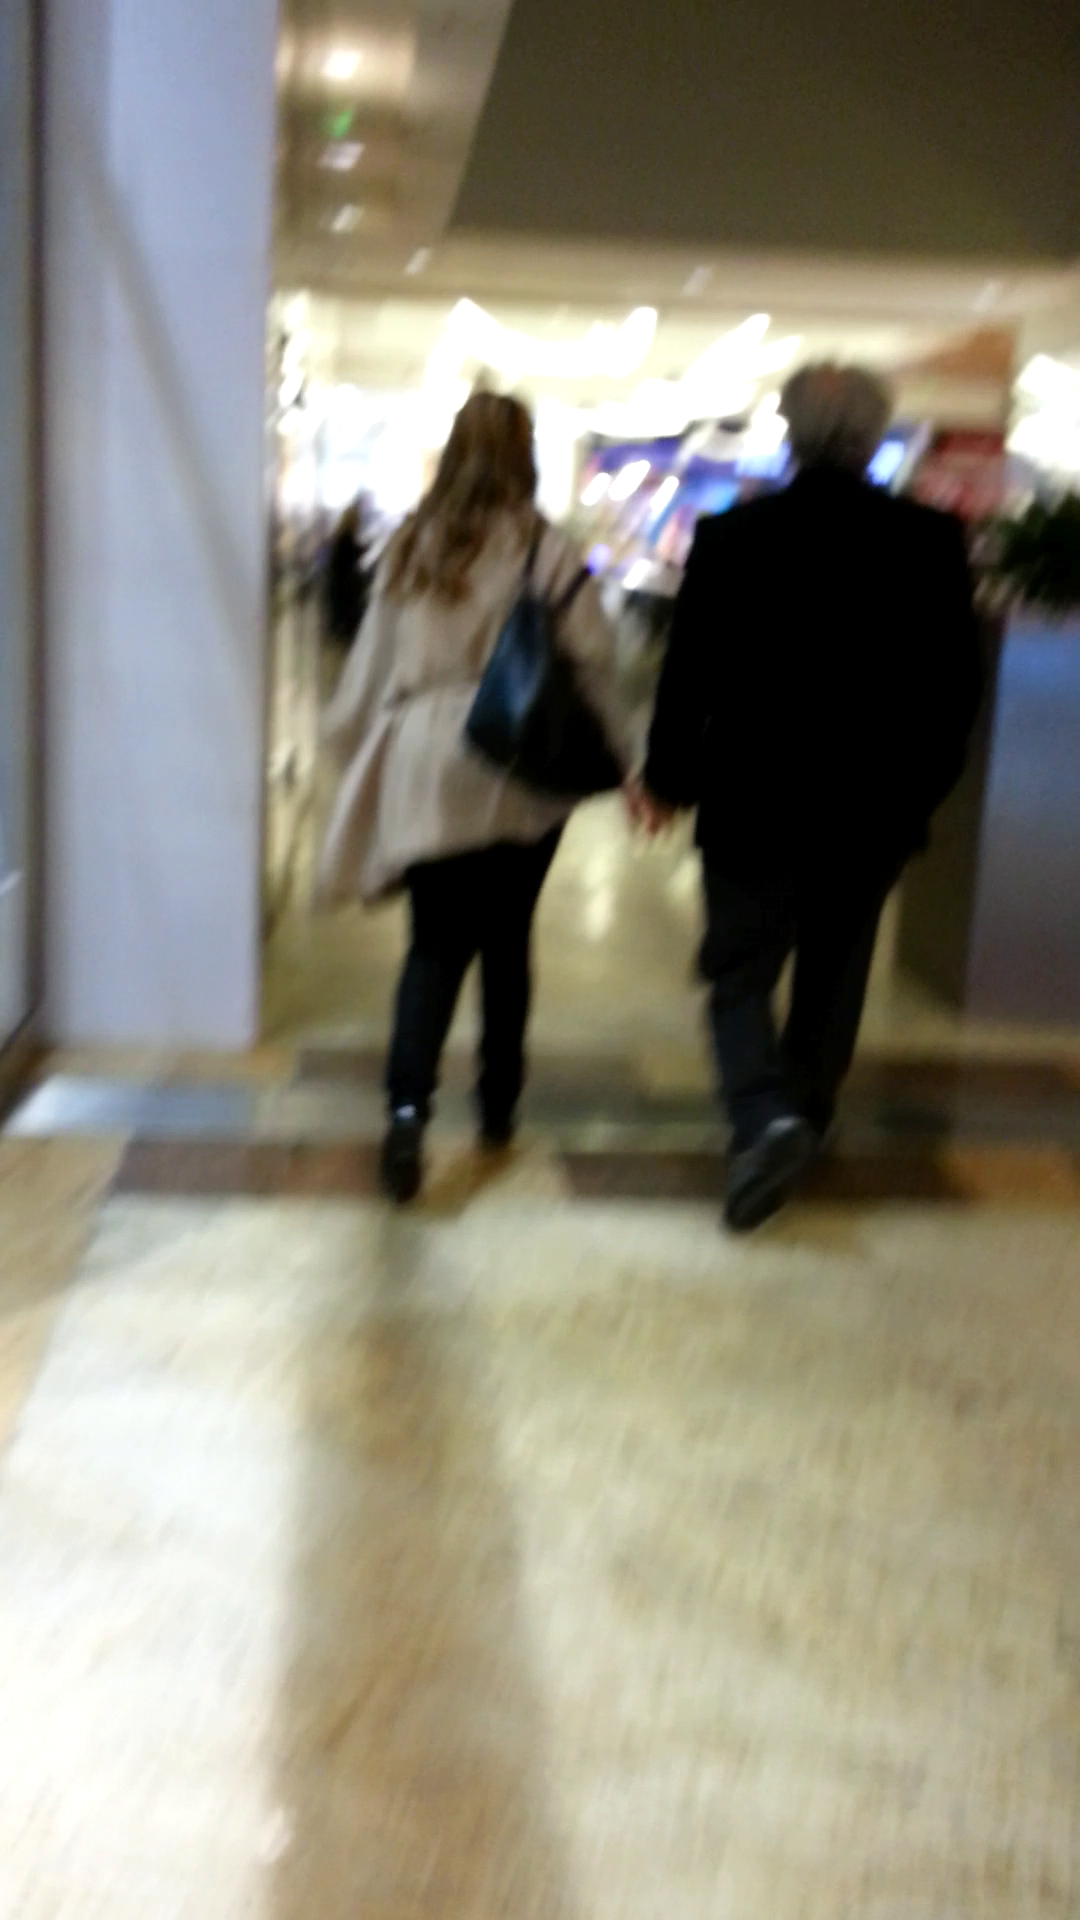 Valvis si partenera sa de viata s-au plimbat de mana prin centrul comercial